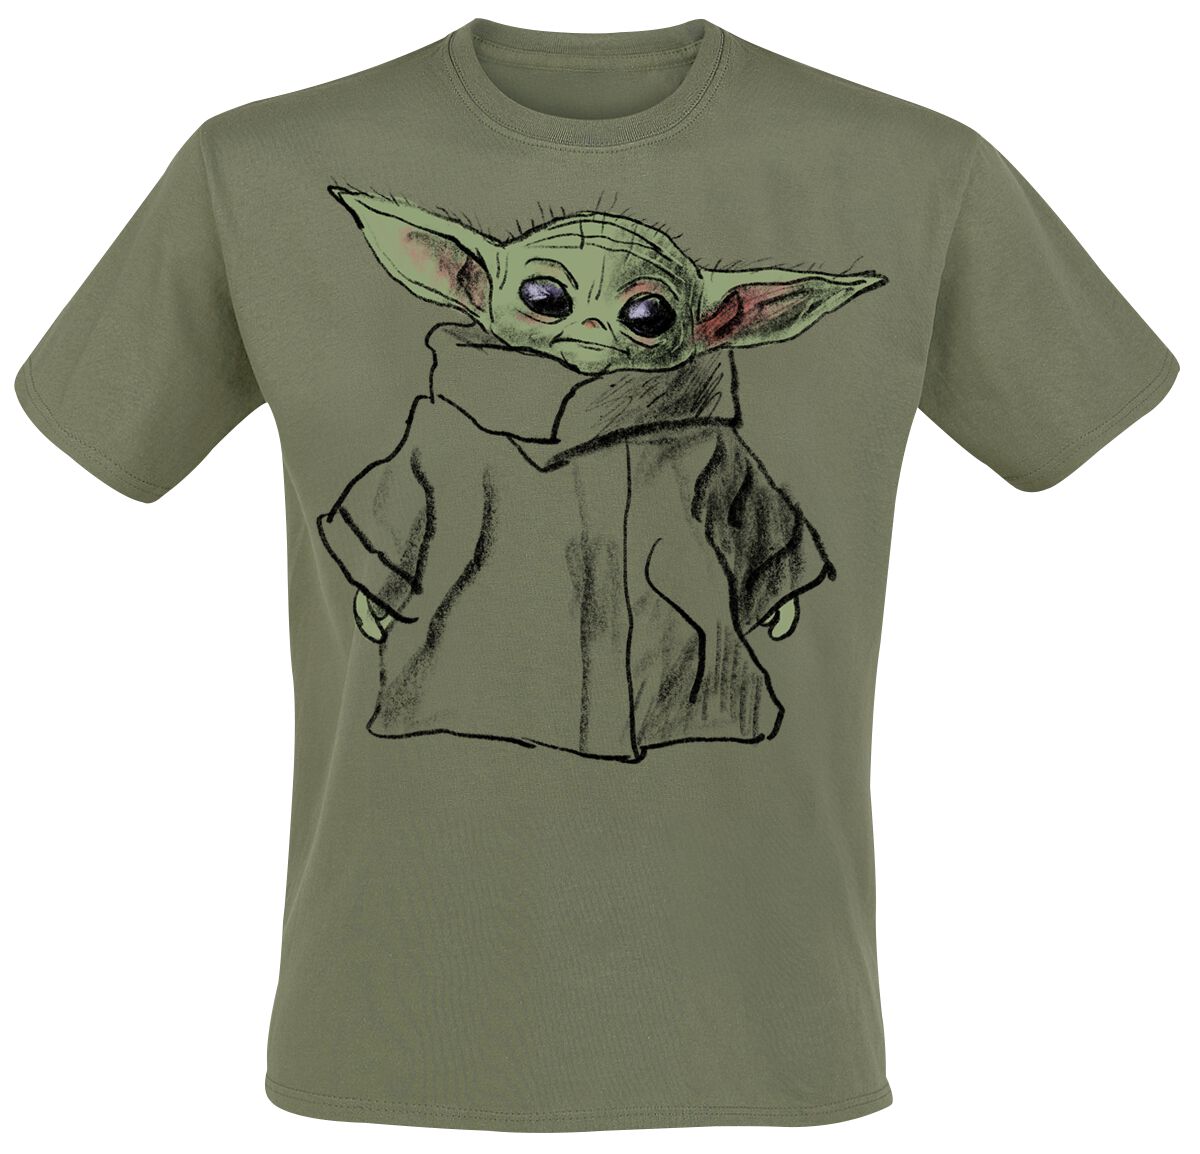 Star Wars The Mandalorian - Grogu - Sketch T-Shirt grün in M